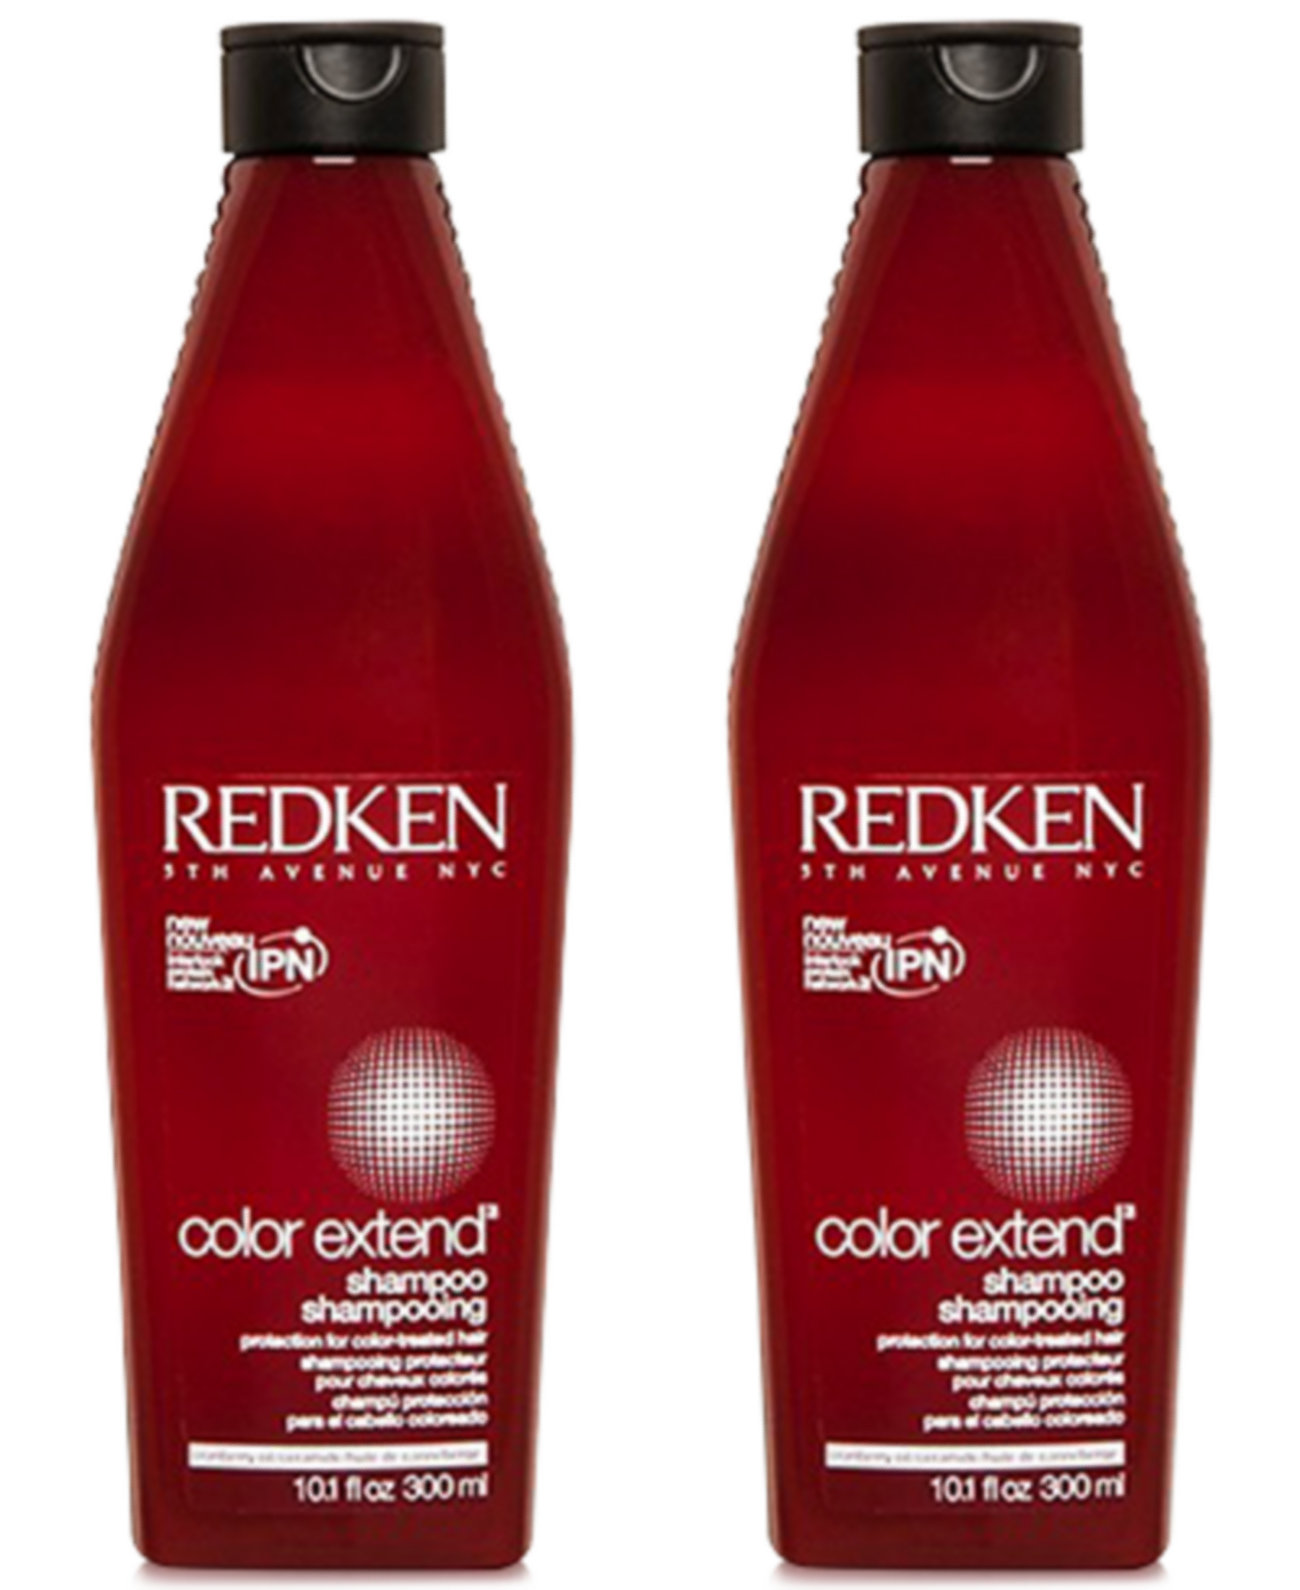 Color Extend Shampoo Duo (два предмета), 10,1 унции, от PUREBEAUTY Salon & Spa Redken